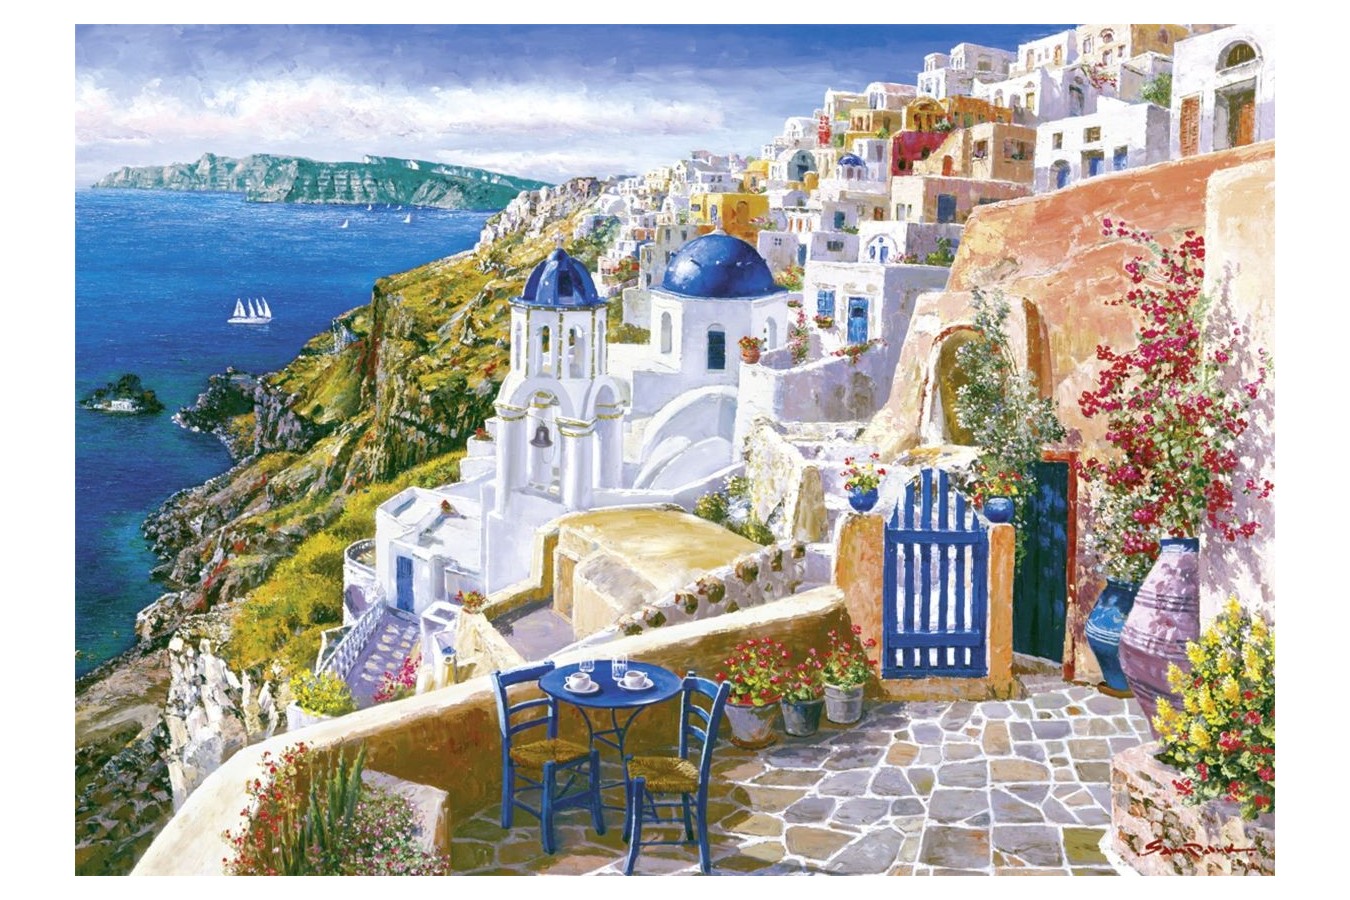 Puzzle Schmidt - Sam Park: Vedere din Santorini, 1000 piese (58560)